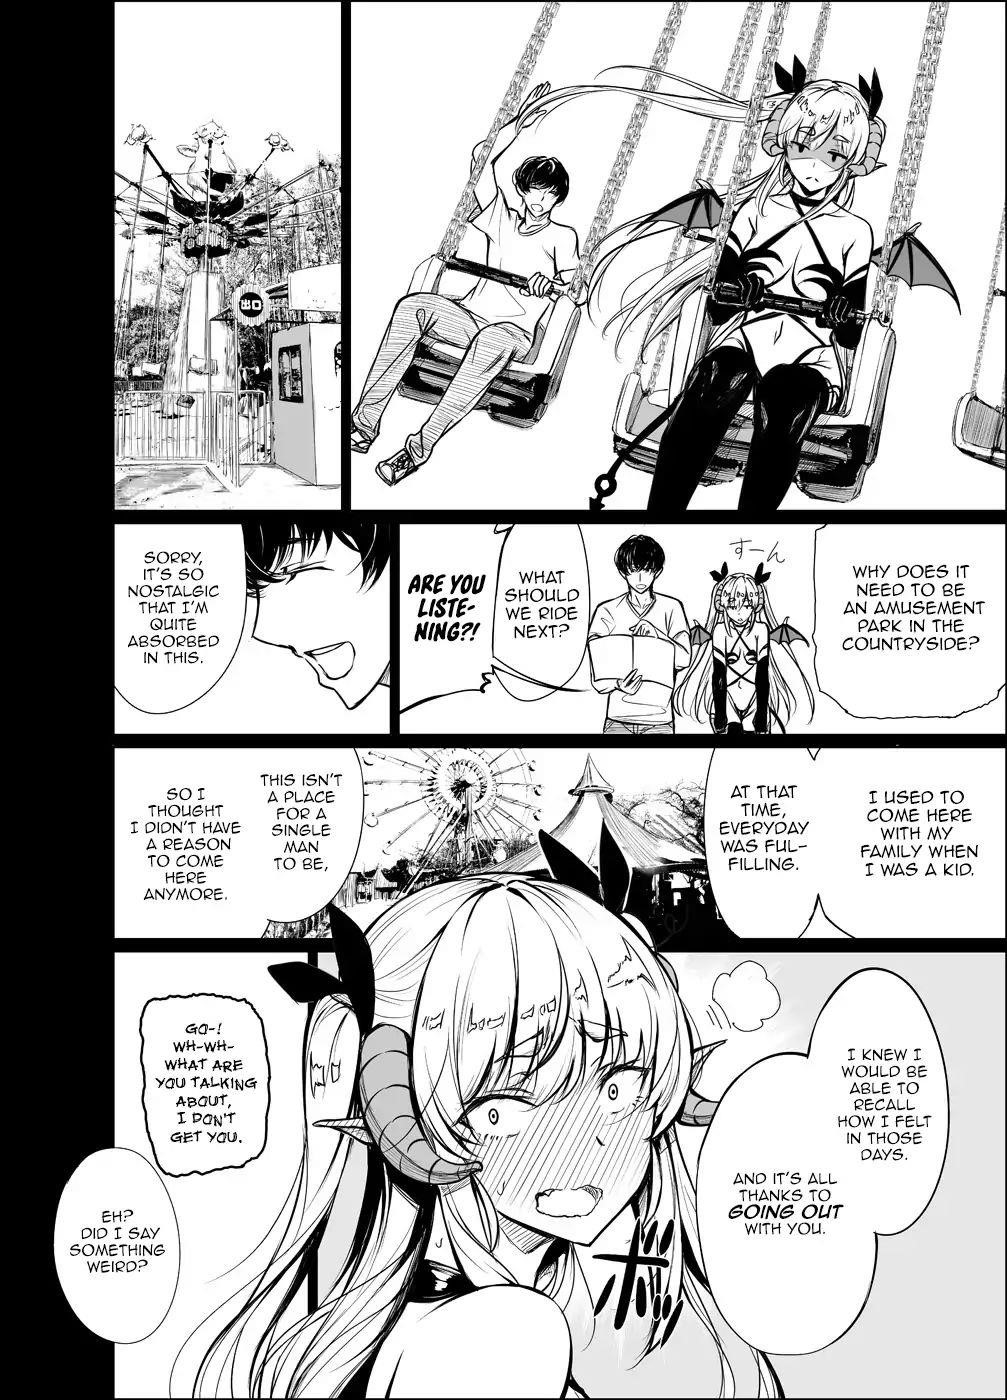 manga about succubus